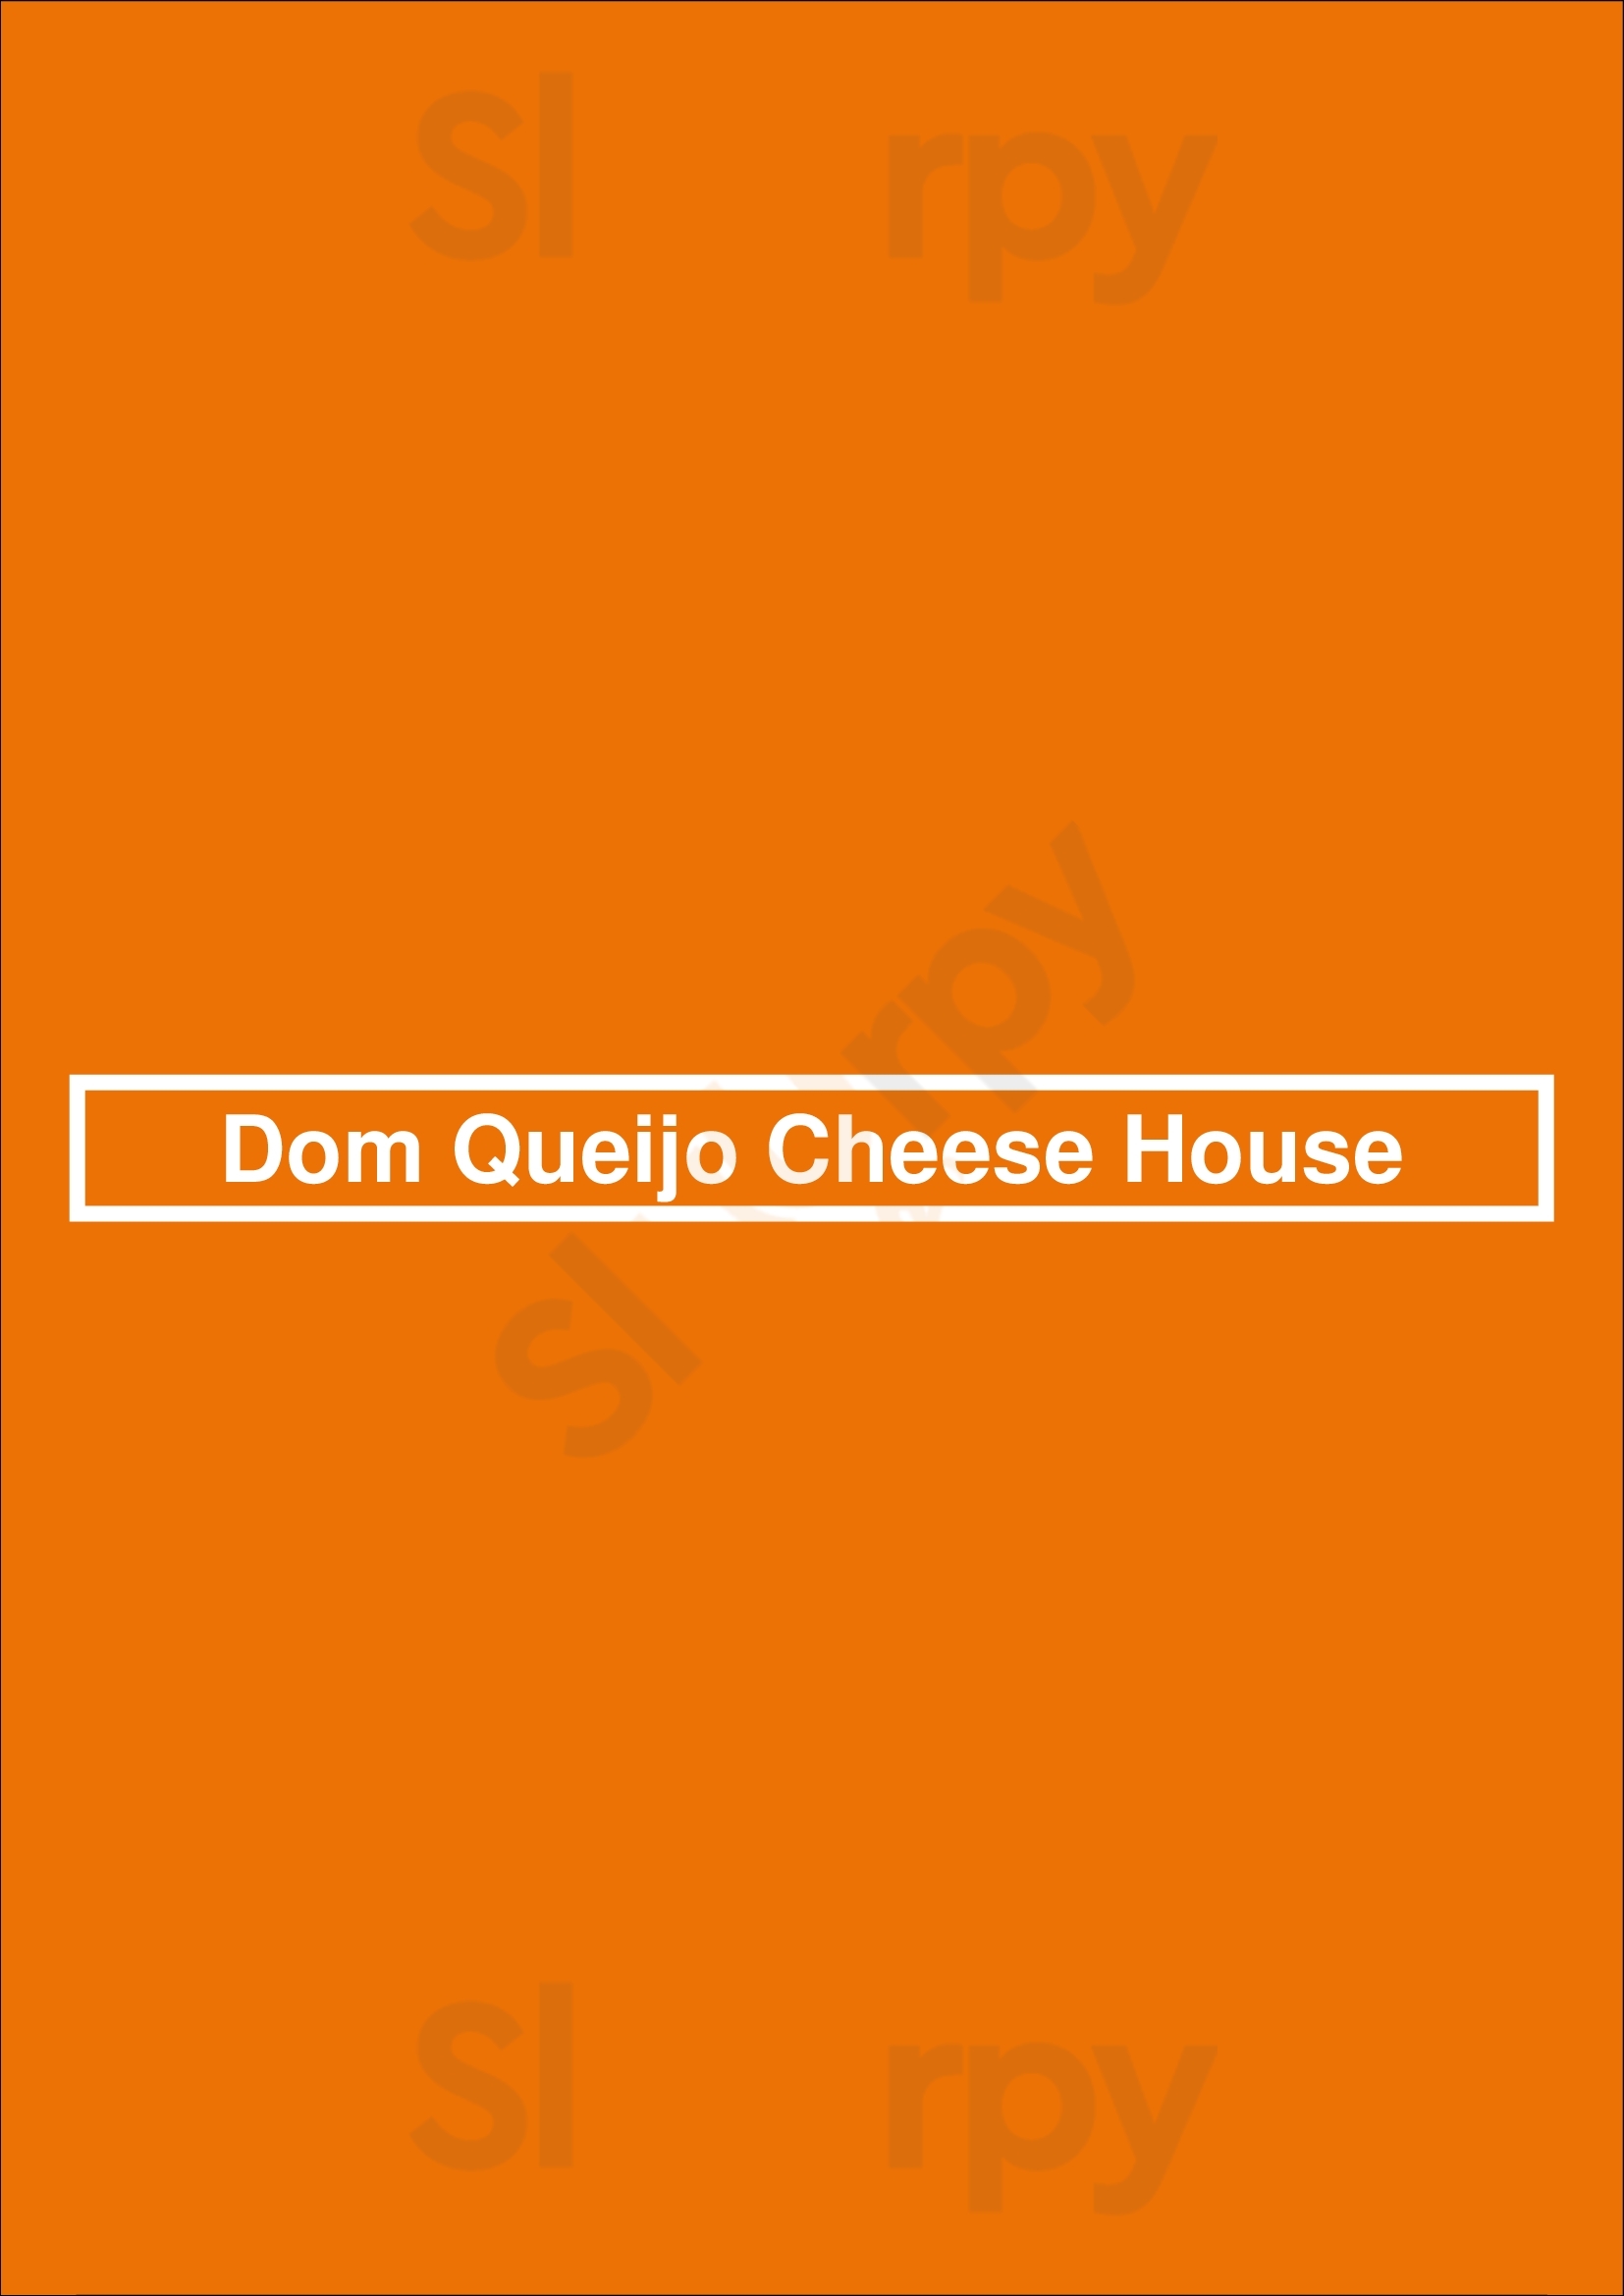 Dom Queijo Cheese House Lisboa Menu - 1